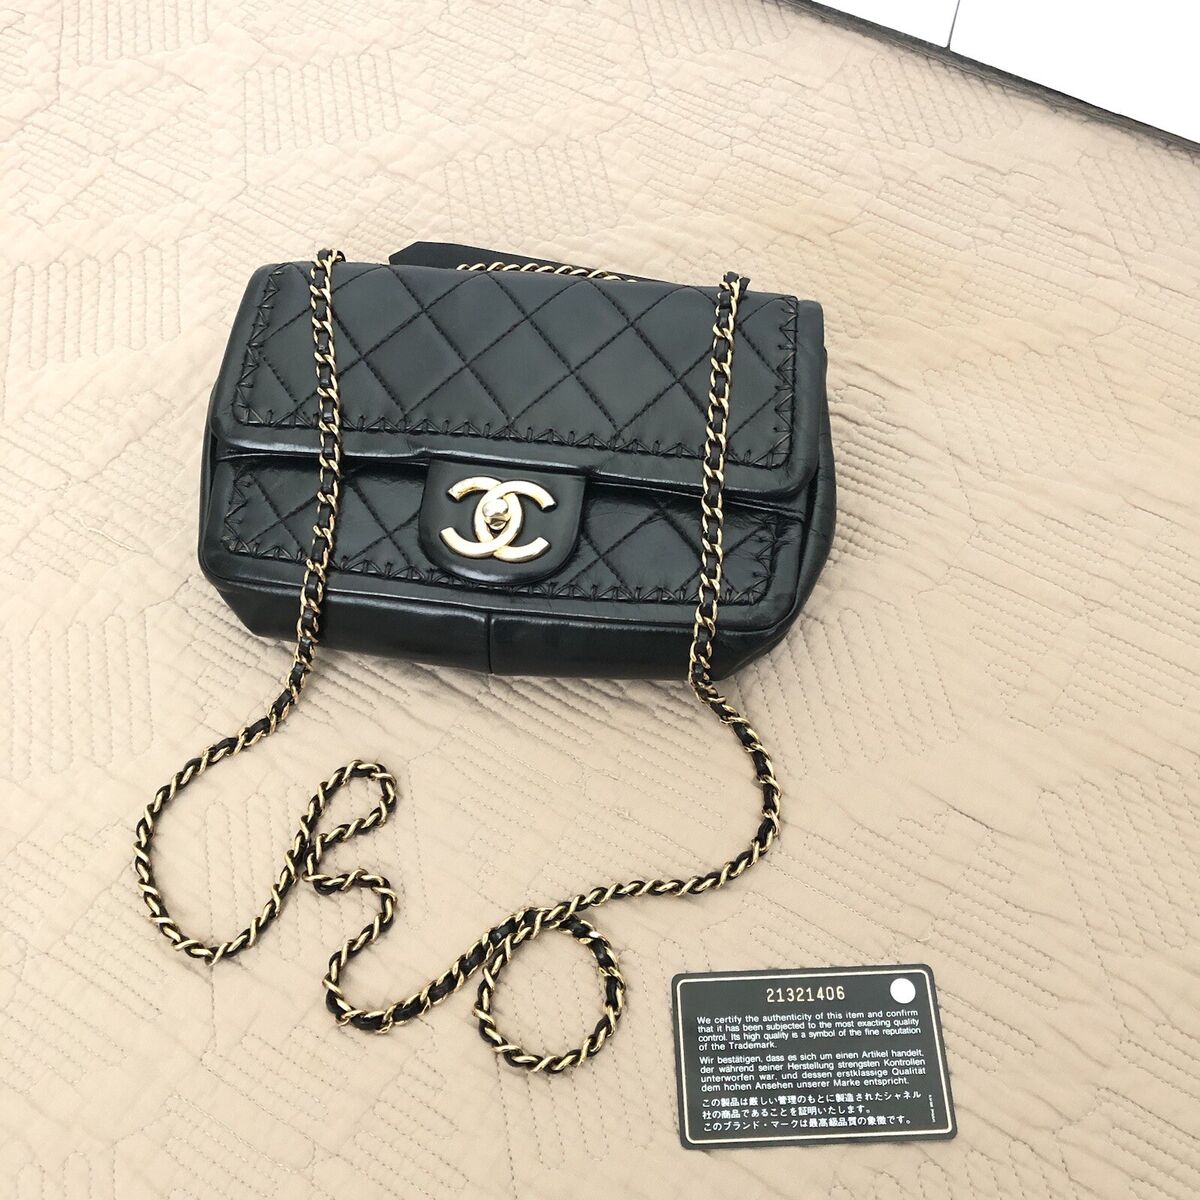 Chanel crackled calfskin glazed finish small flap bag , gold tone hardware